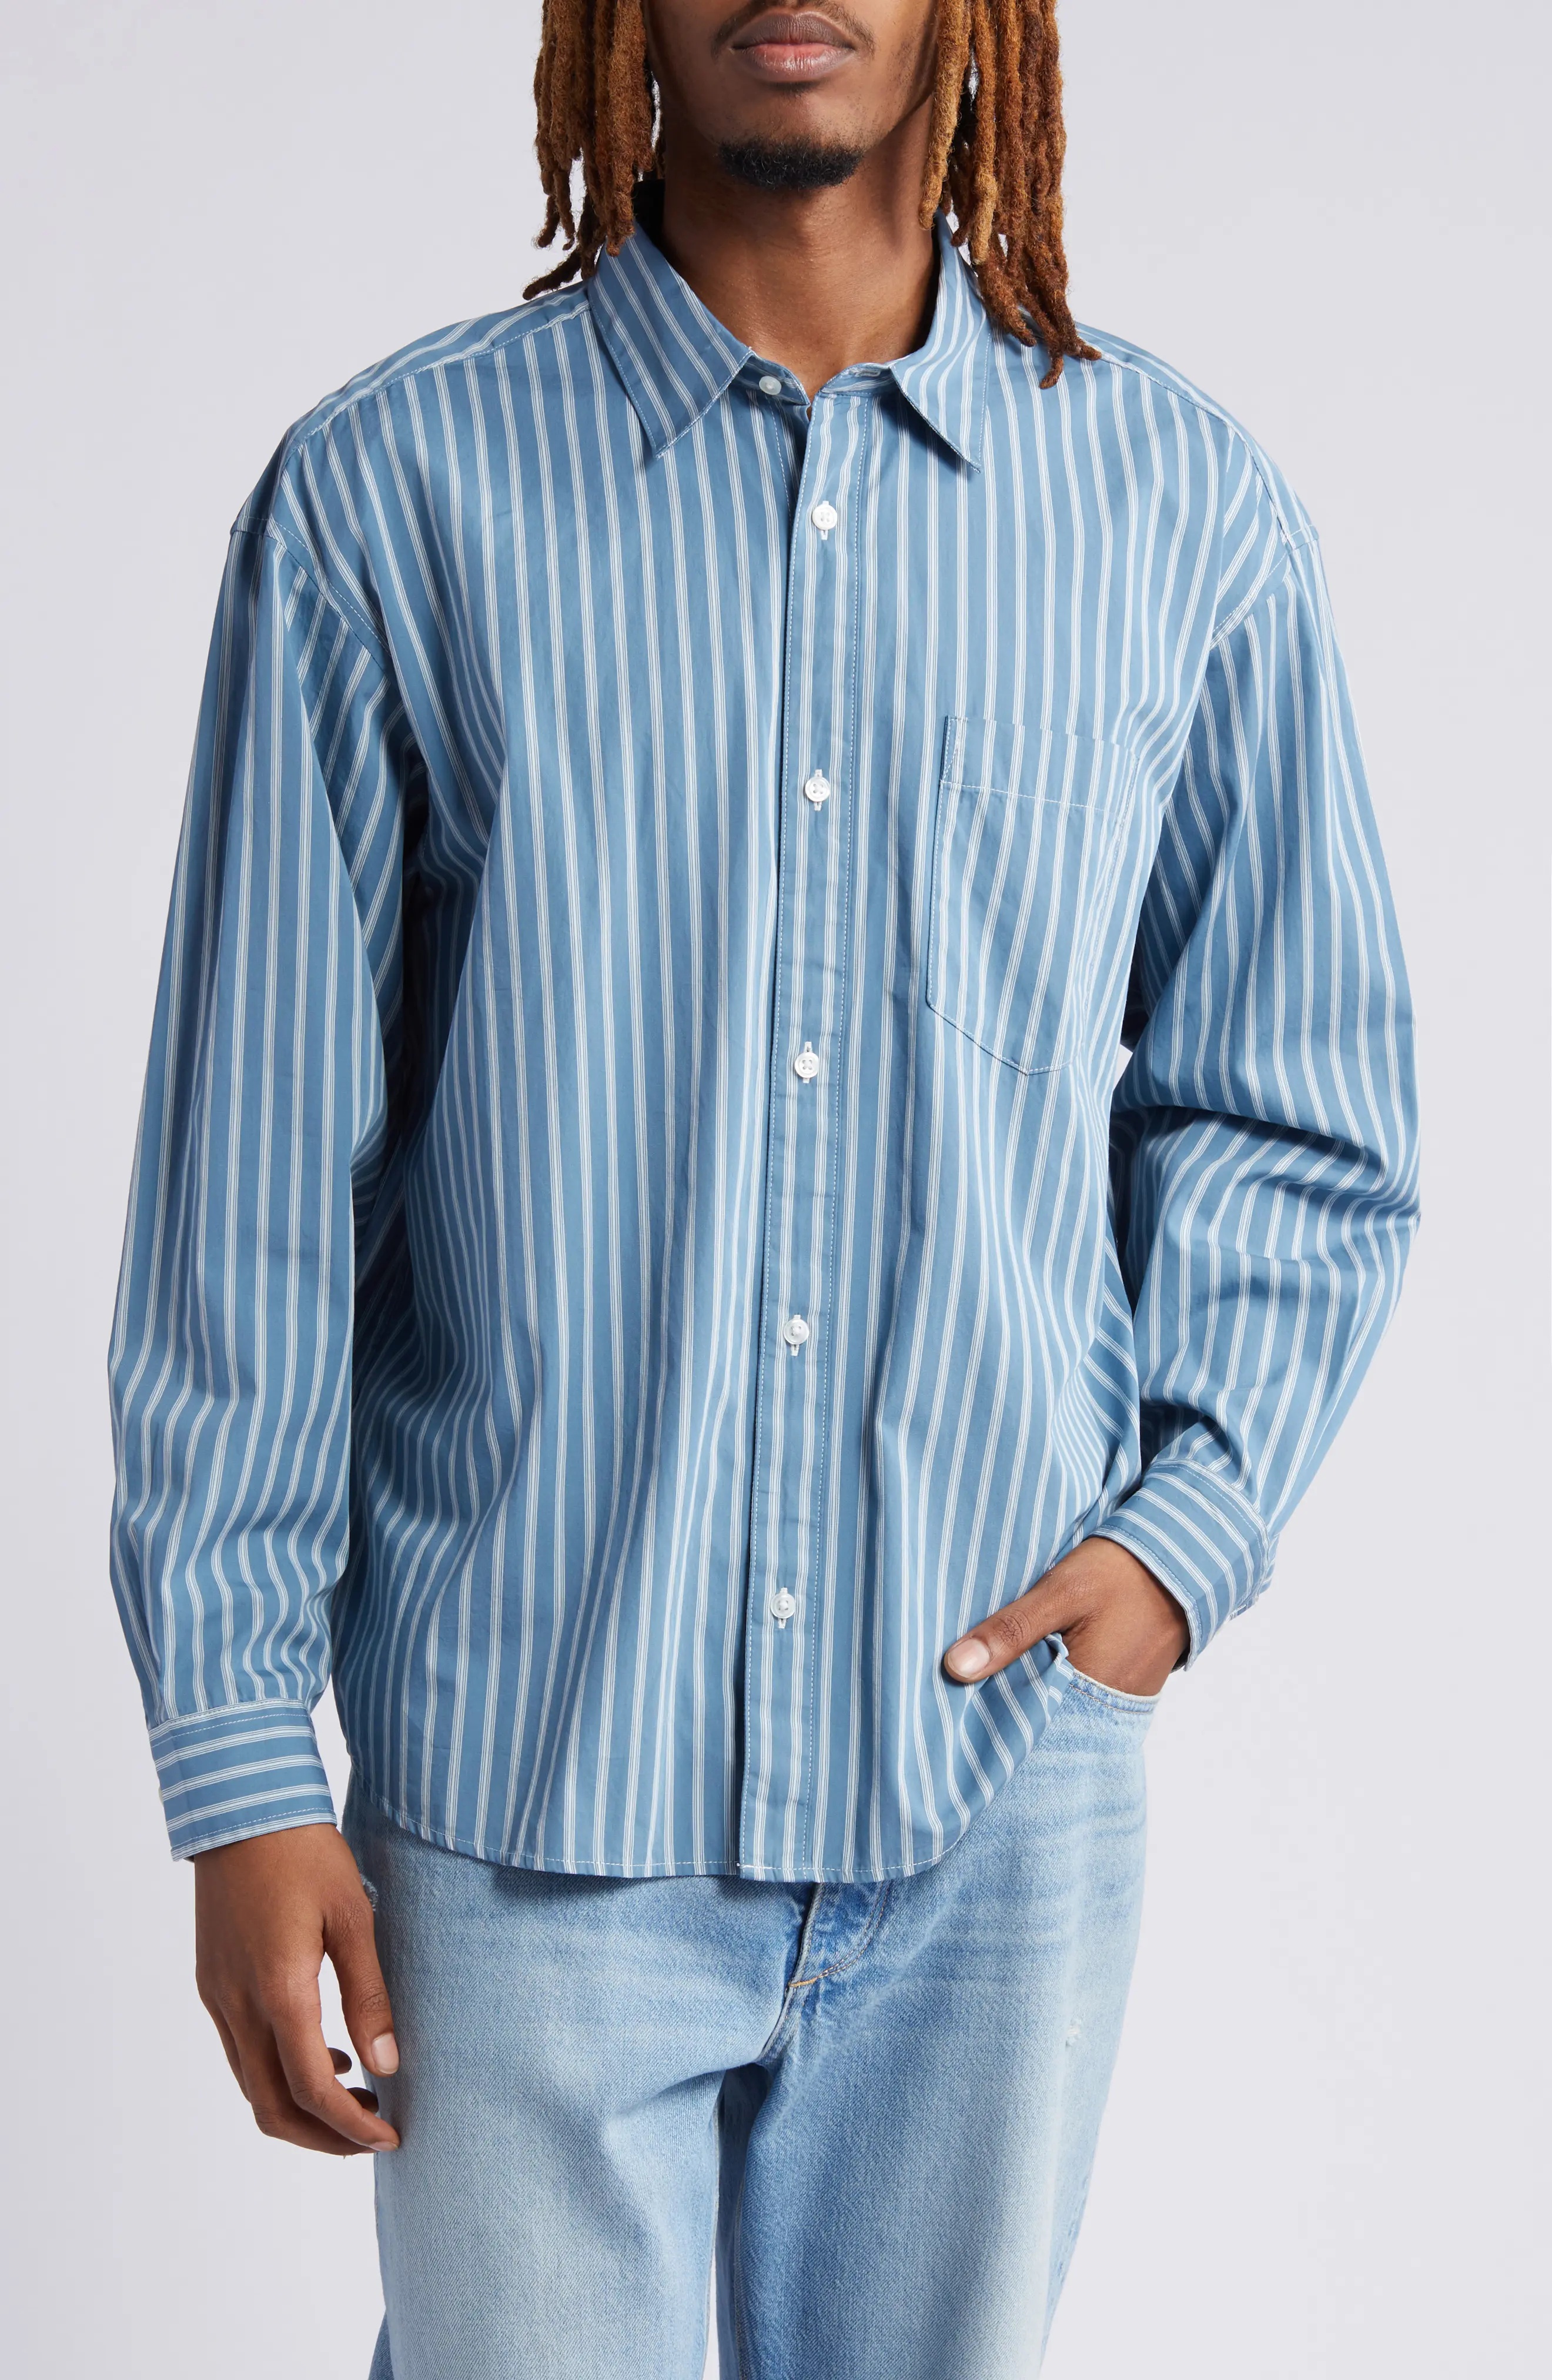 Ligety Stripe Button-Up Shirt in Ligety Stripe Blue/Wax - 1